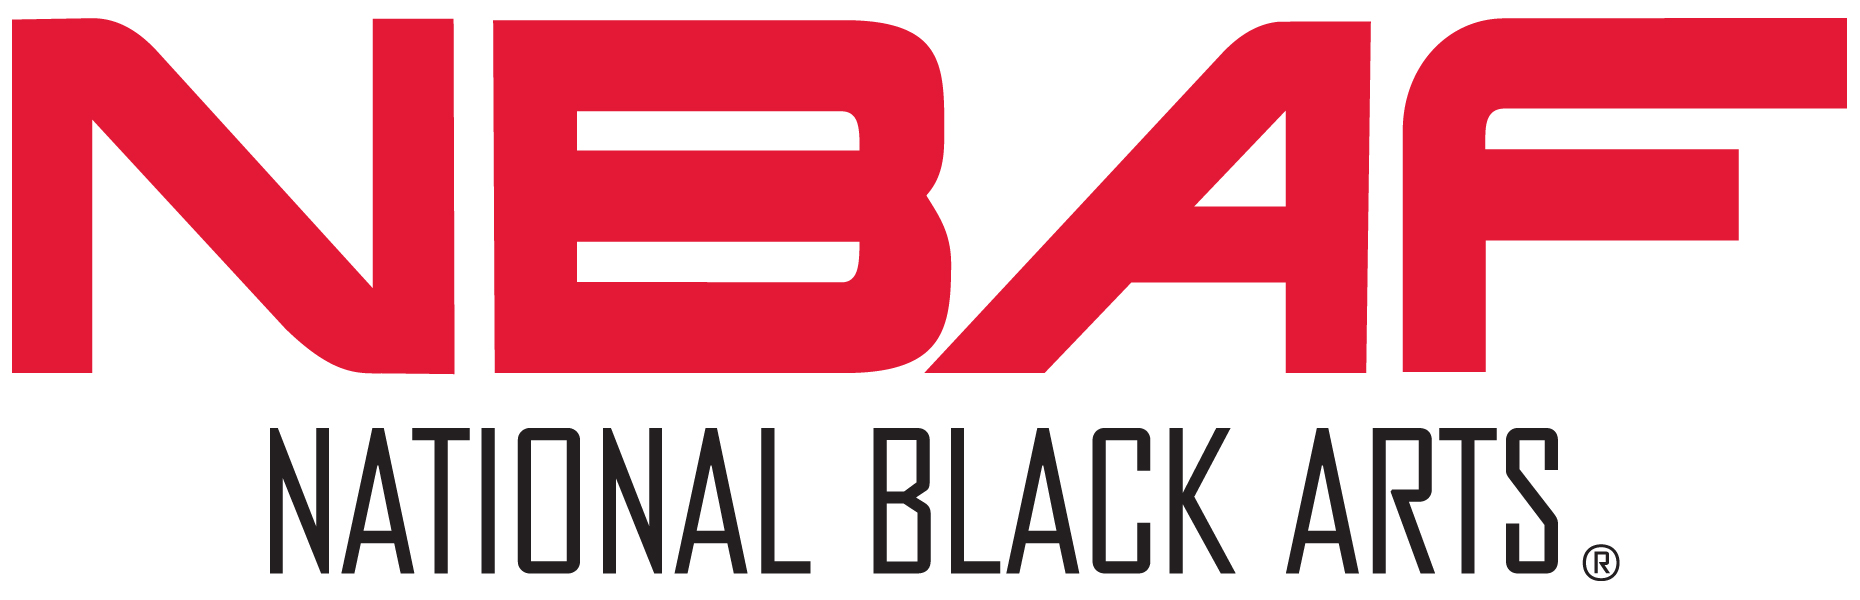 NBAF_BlackArts_Logo_color_300dpi.png